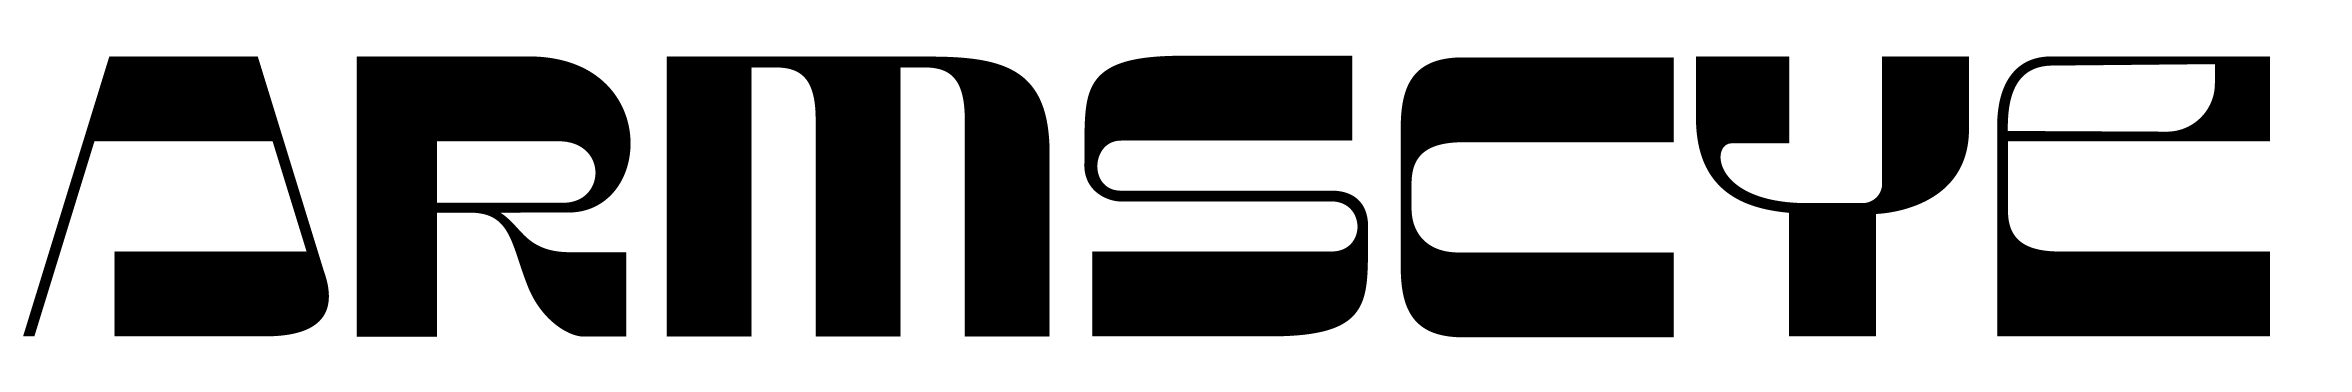 Armscye logo